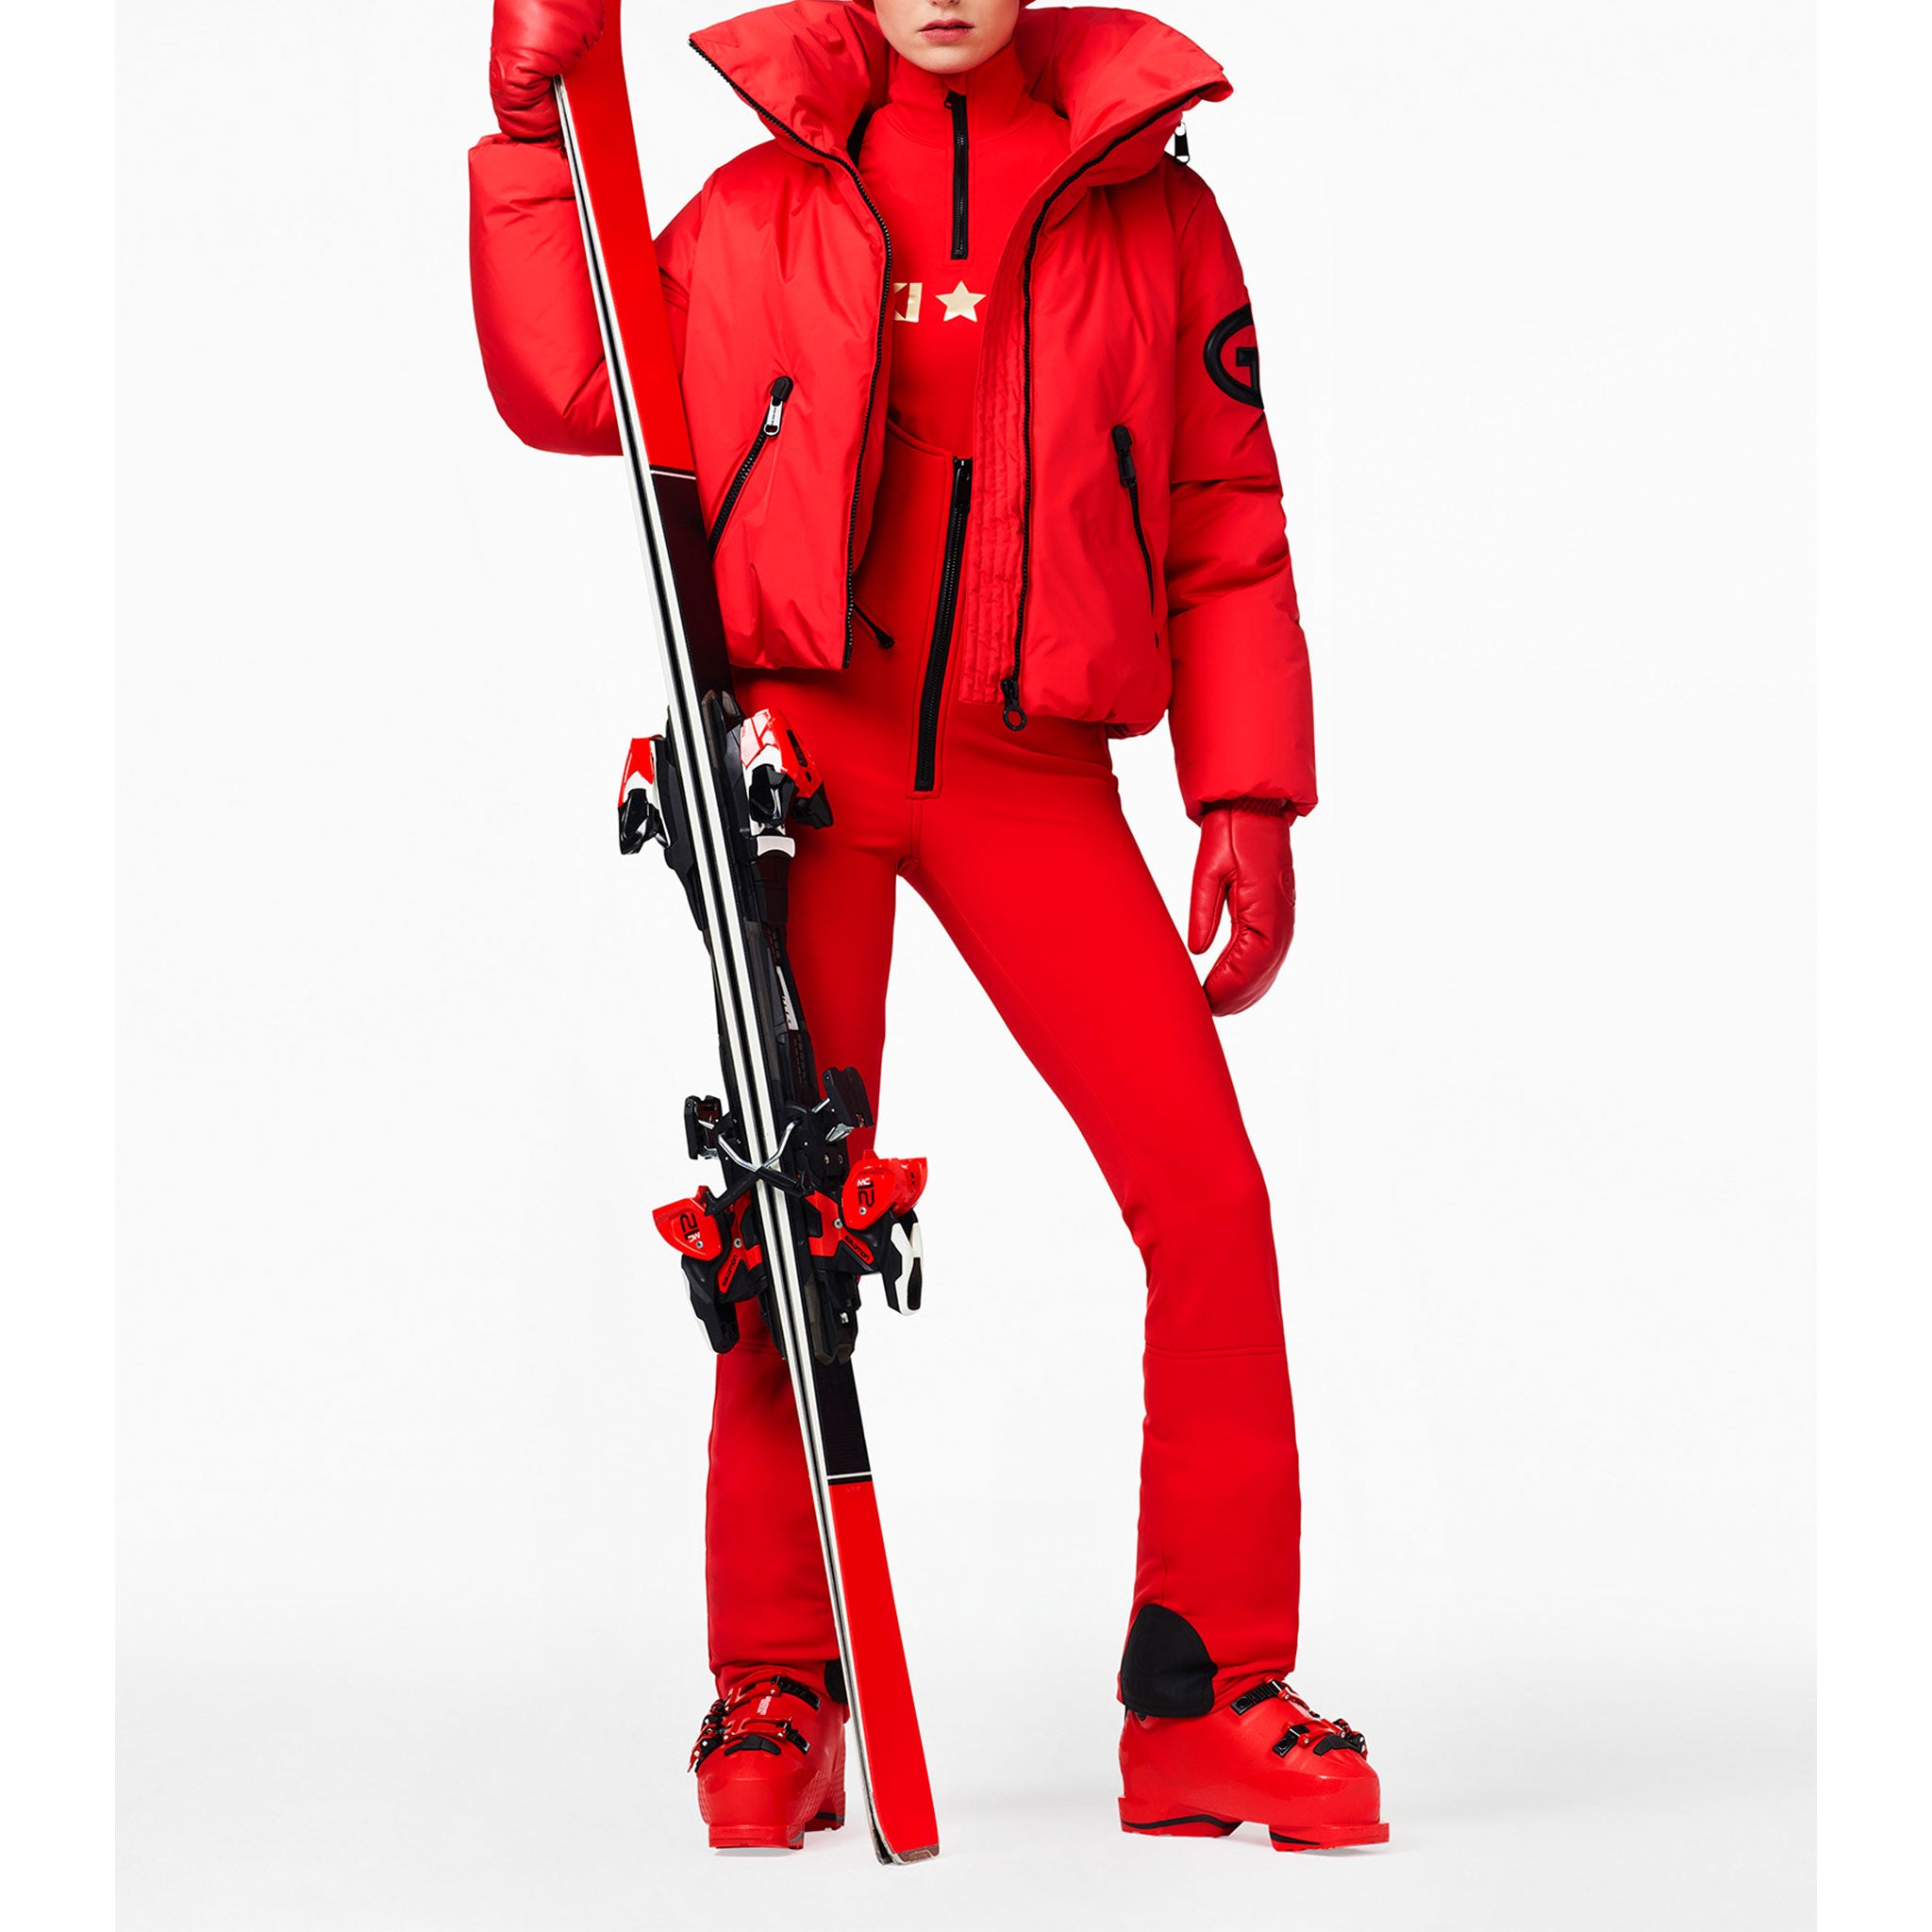 Porter Ski Jacket in Flame Red